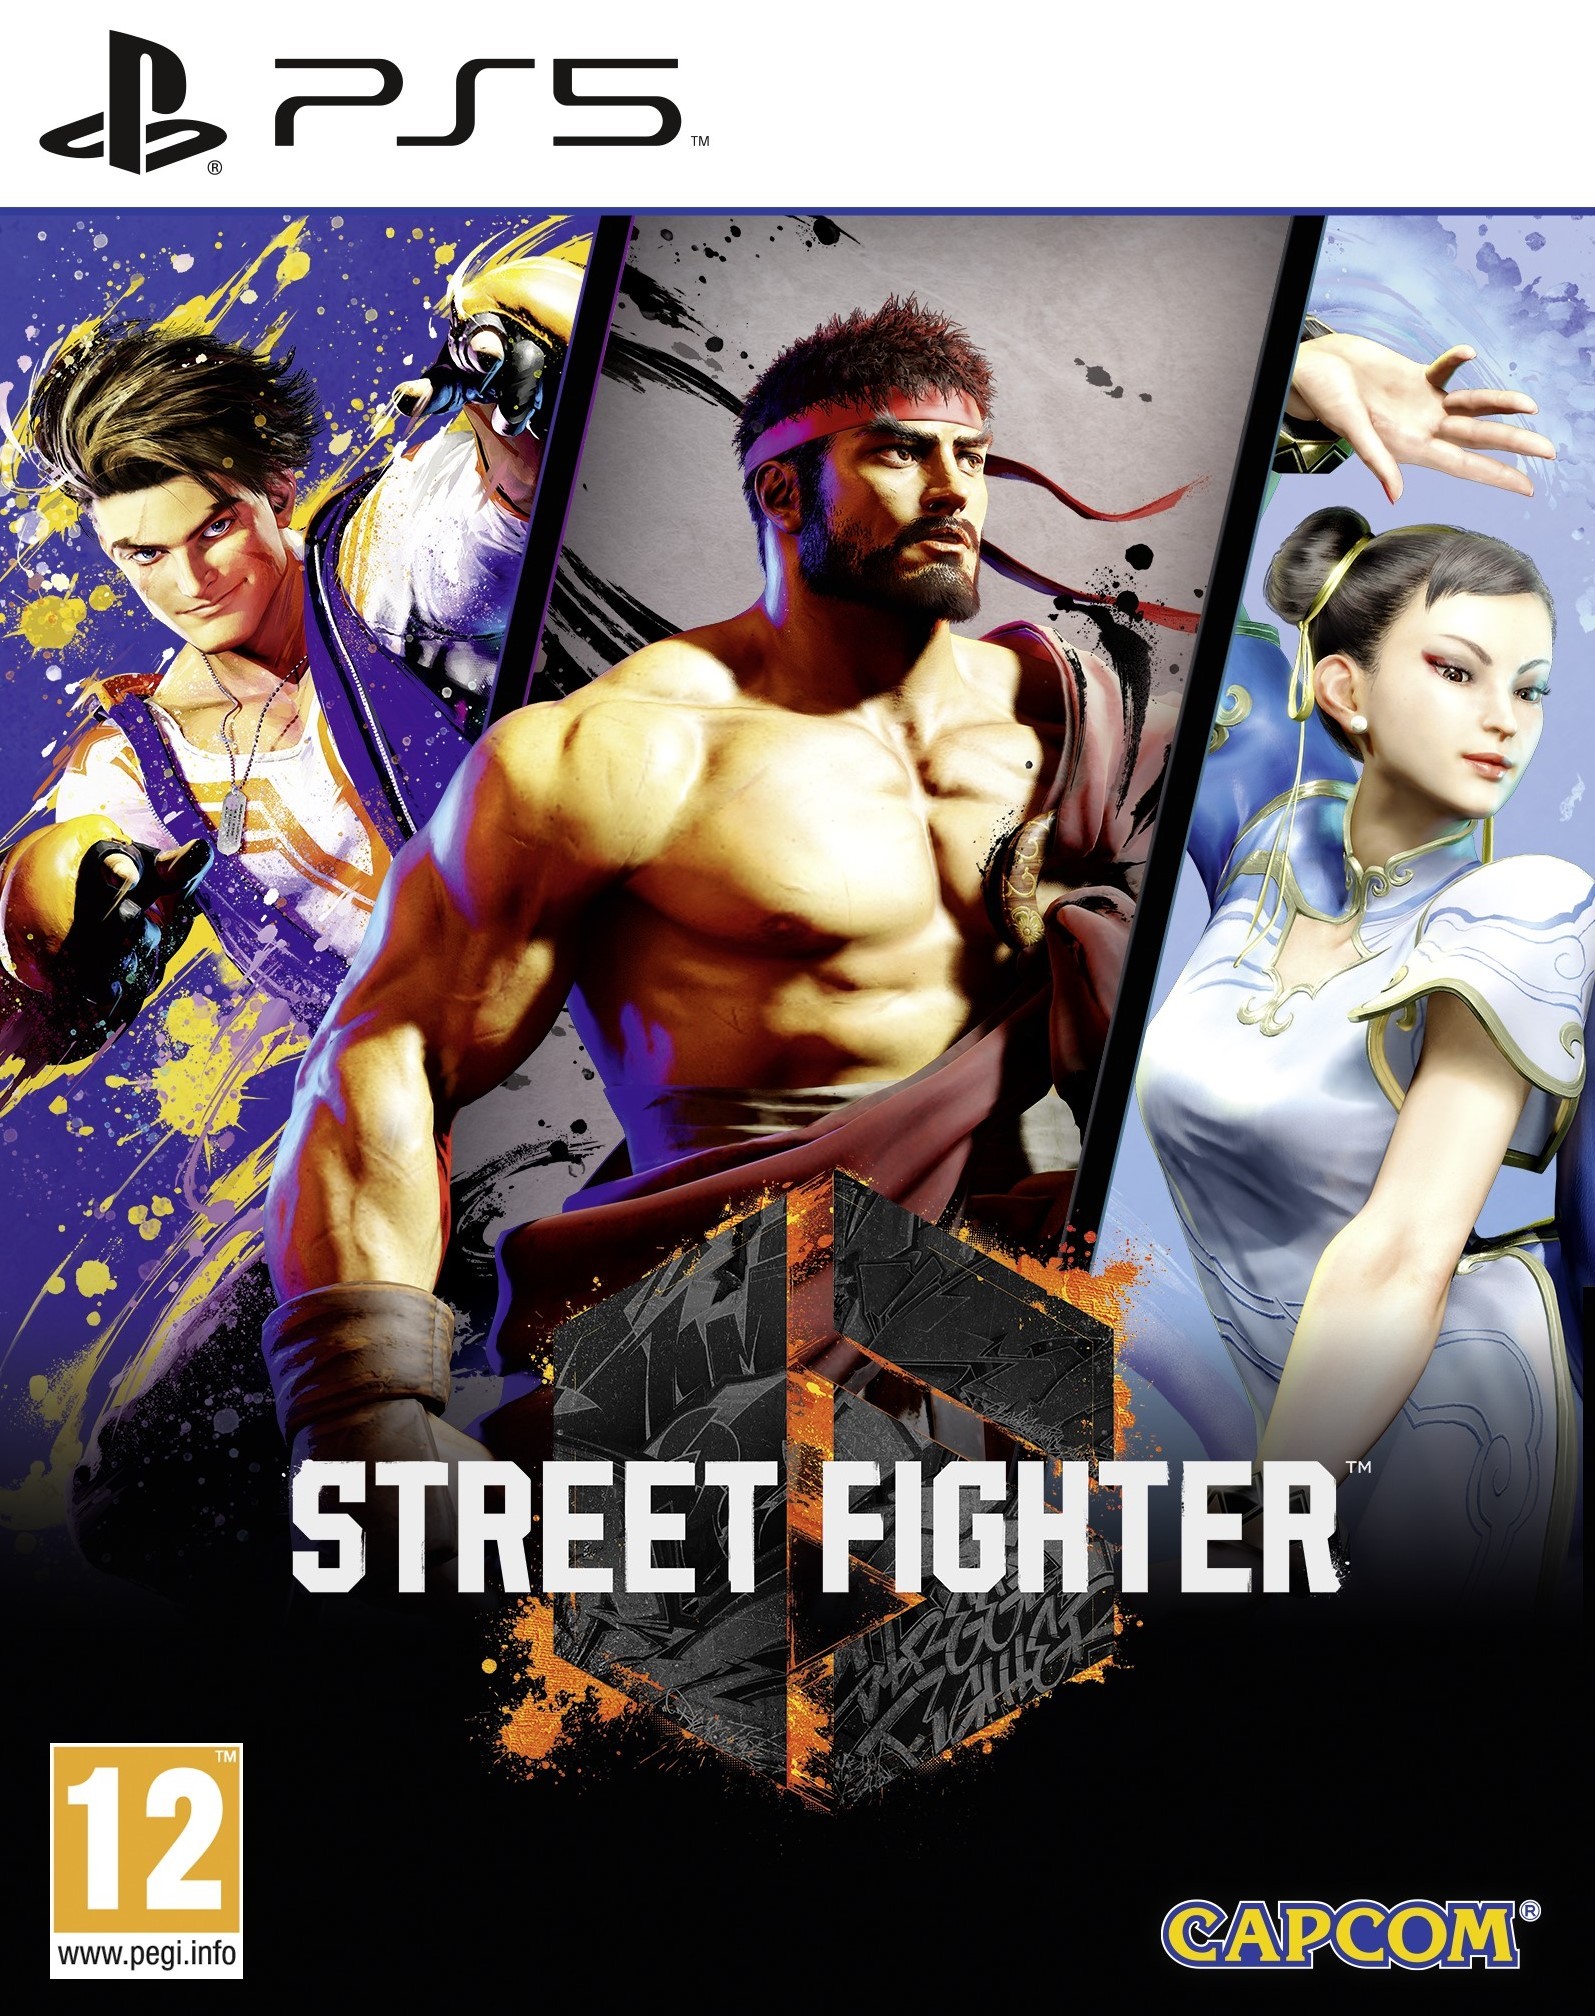 Street Fighter 6 Steelbook Edition + Preorder Bonus